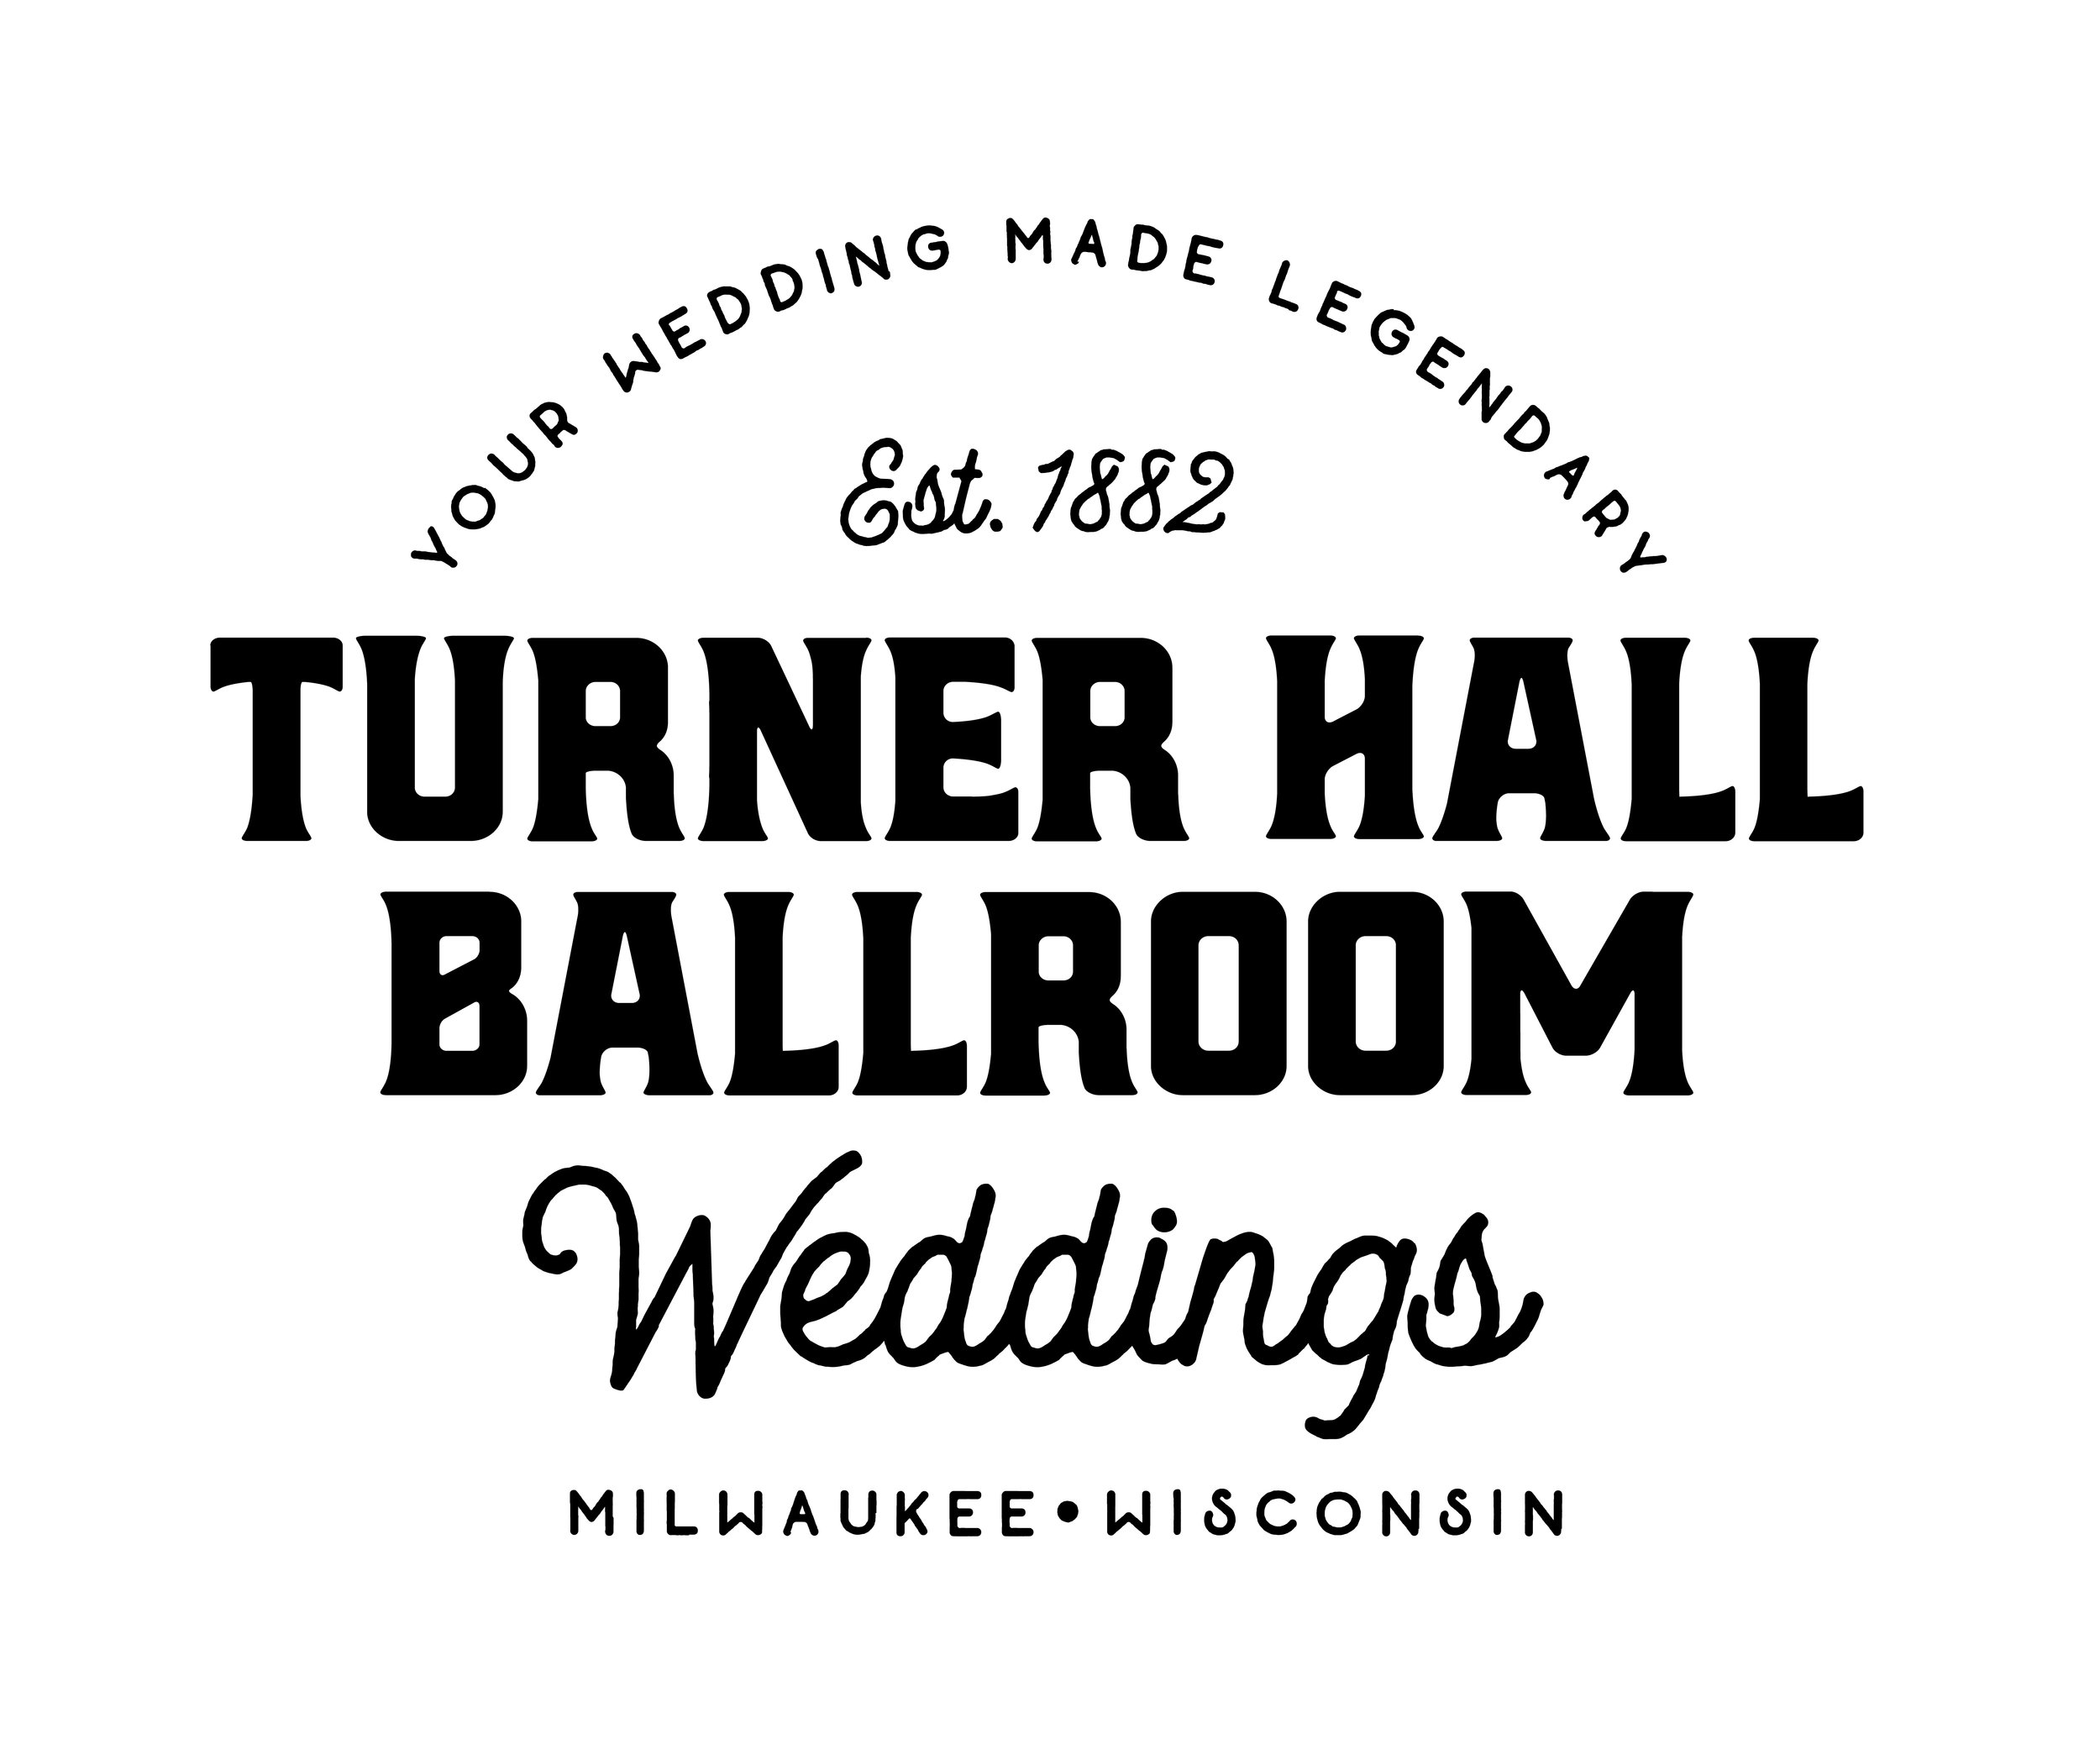 Turner-Hall-Ballroom-Weddings-logo-full.jpg